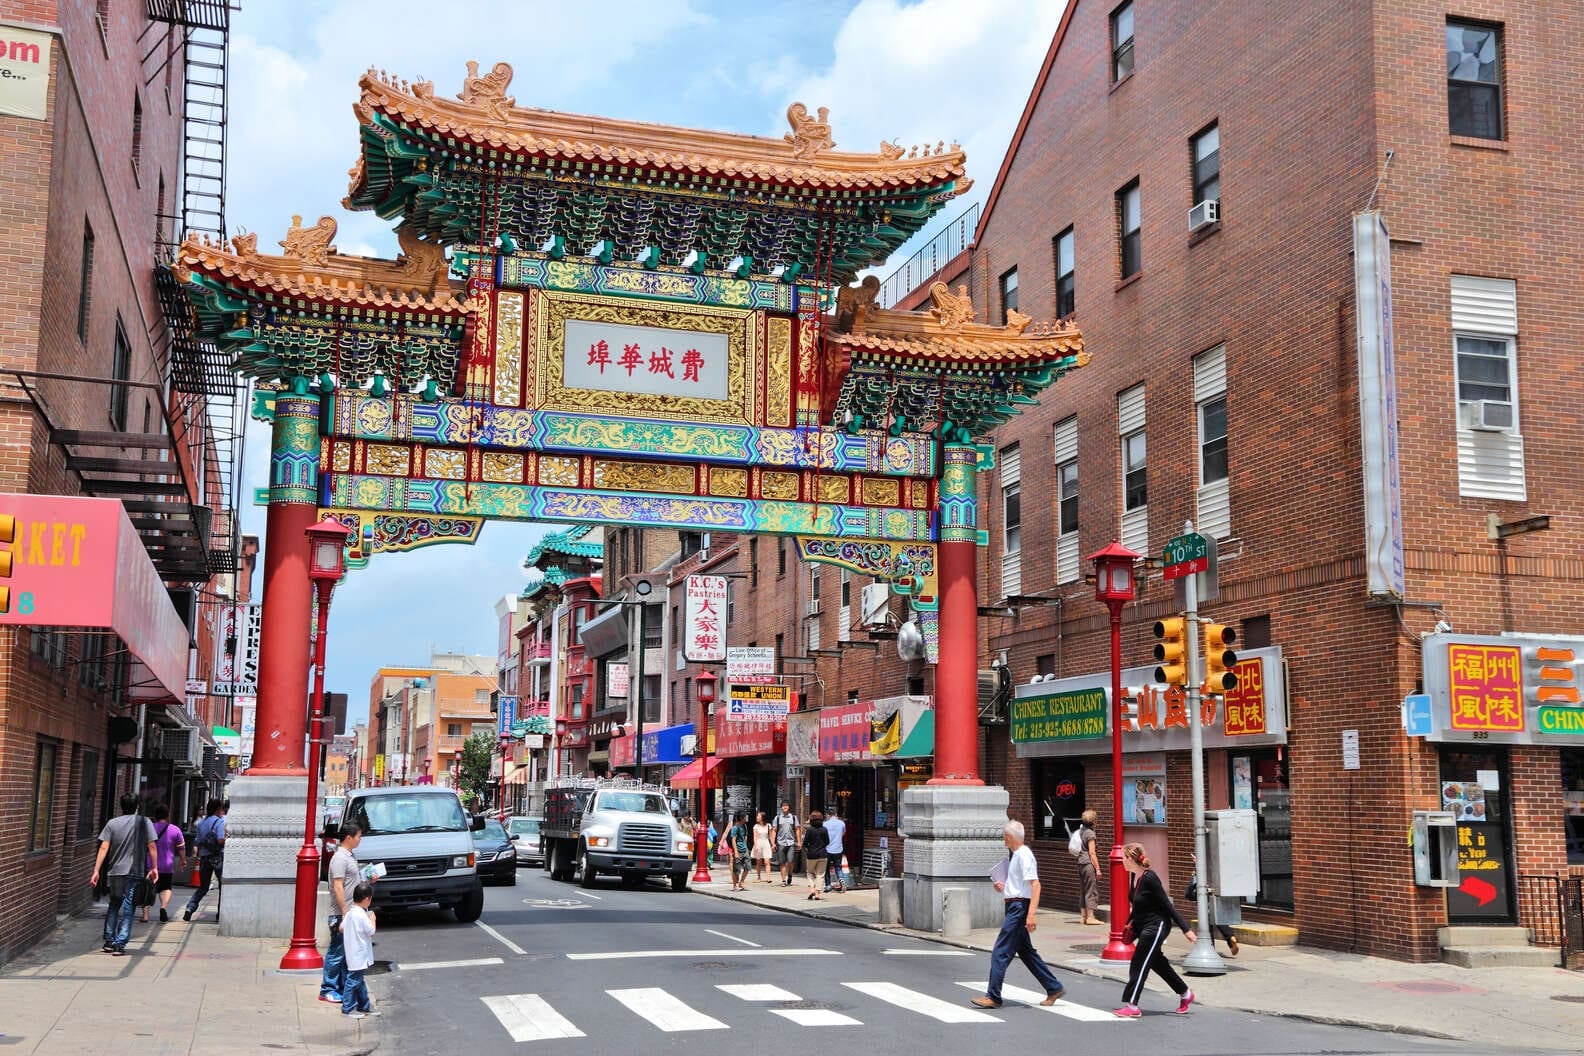 Where to Eat in Philadelphia’s Chinatown